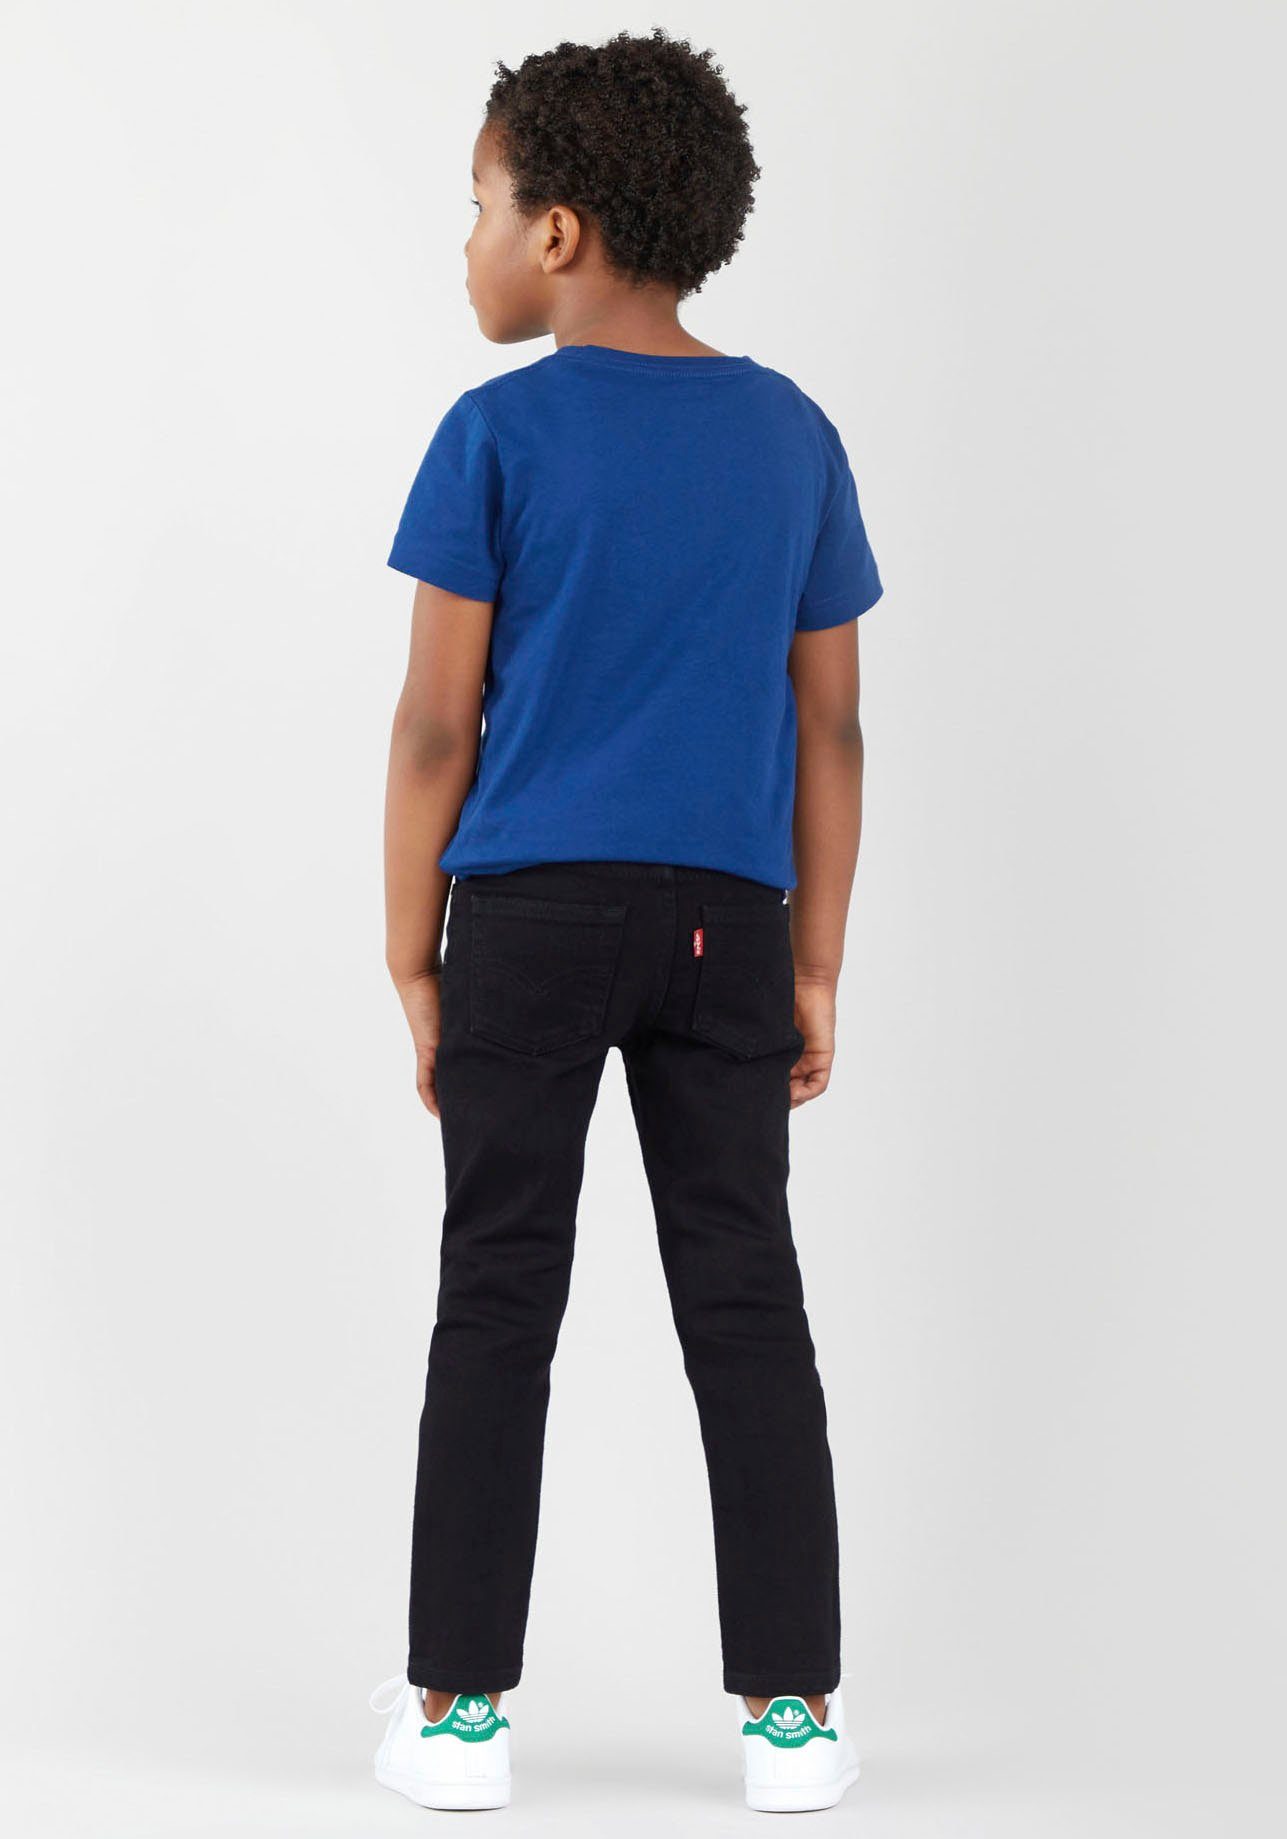 JEANS SKINNY black for BOYS FIT 510 Skinny-fit-Jeans Levi's® Kids